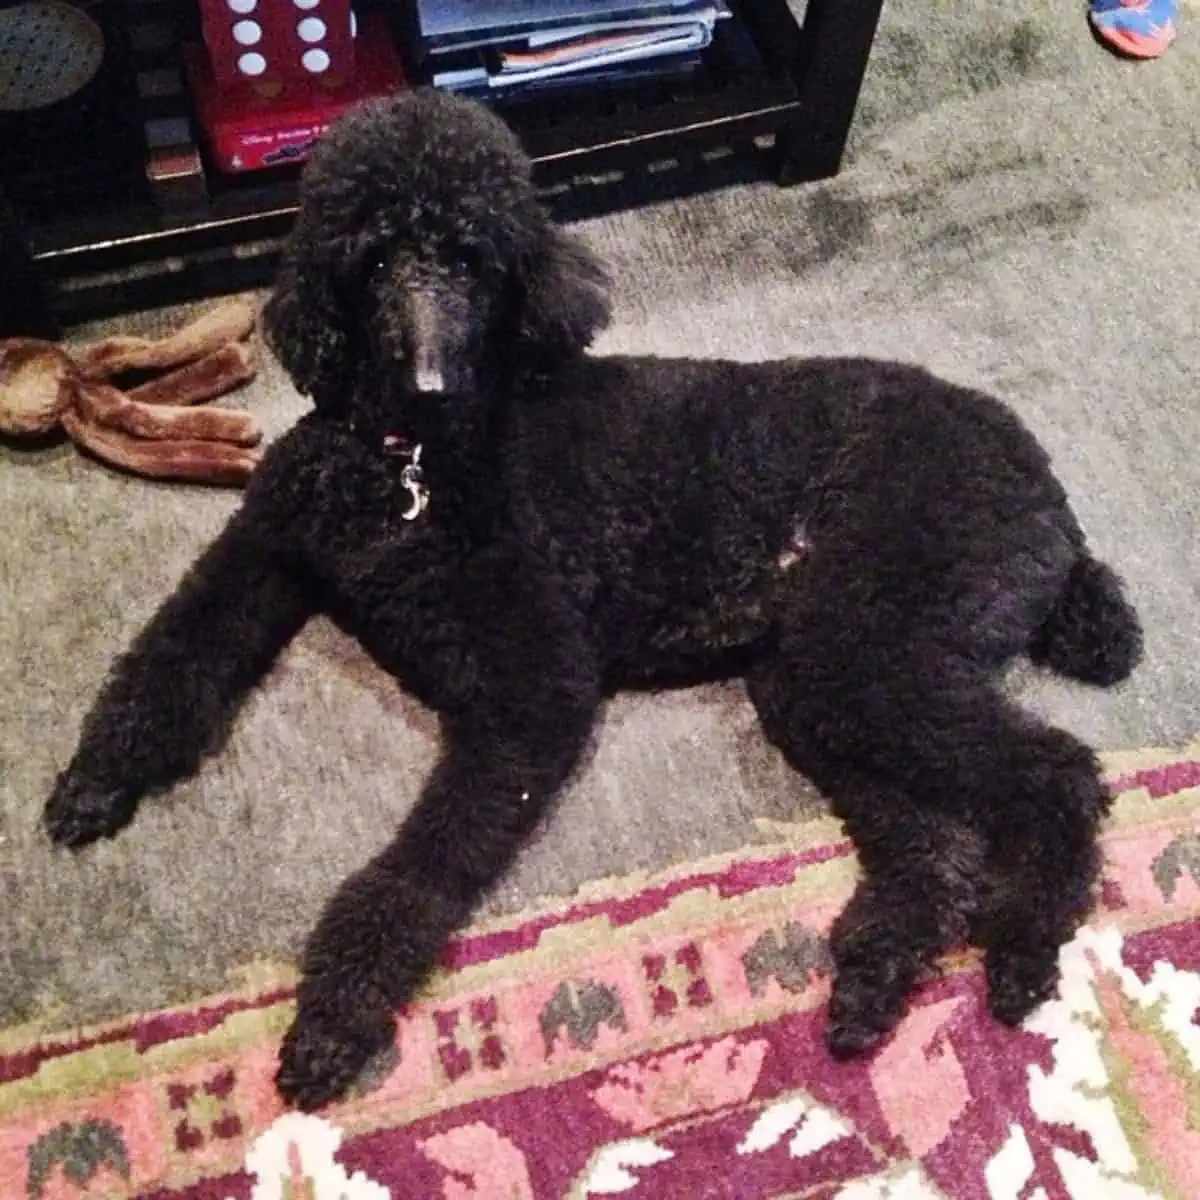 Standard Poodle lying on the floor